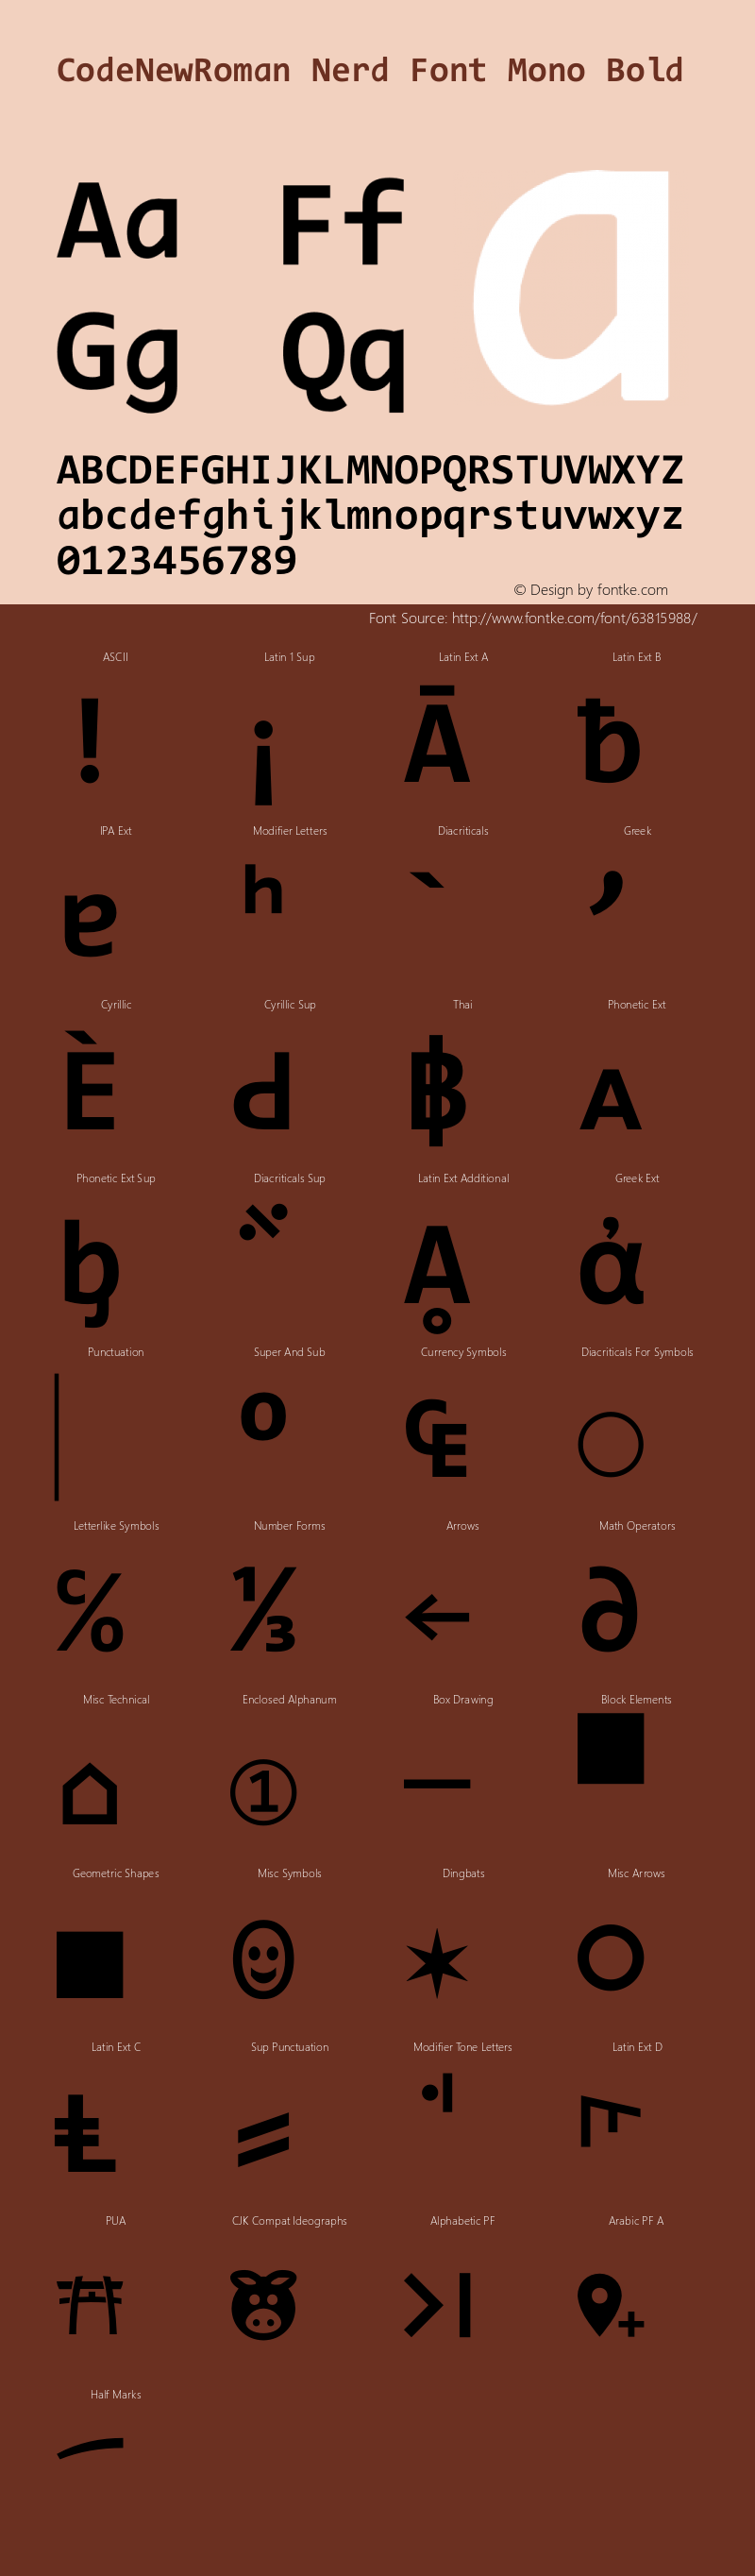 Code New Roman Bold Nerd Font Complete Mono Version 1.90 November 29, 2014 Font Sample